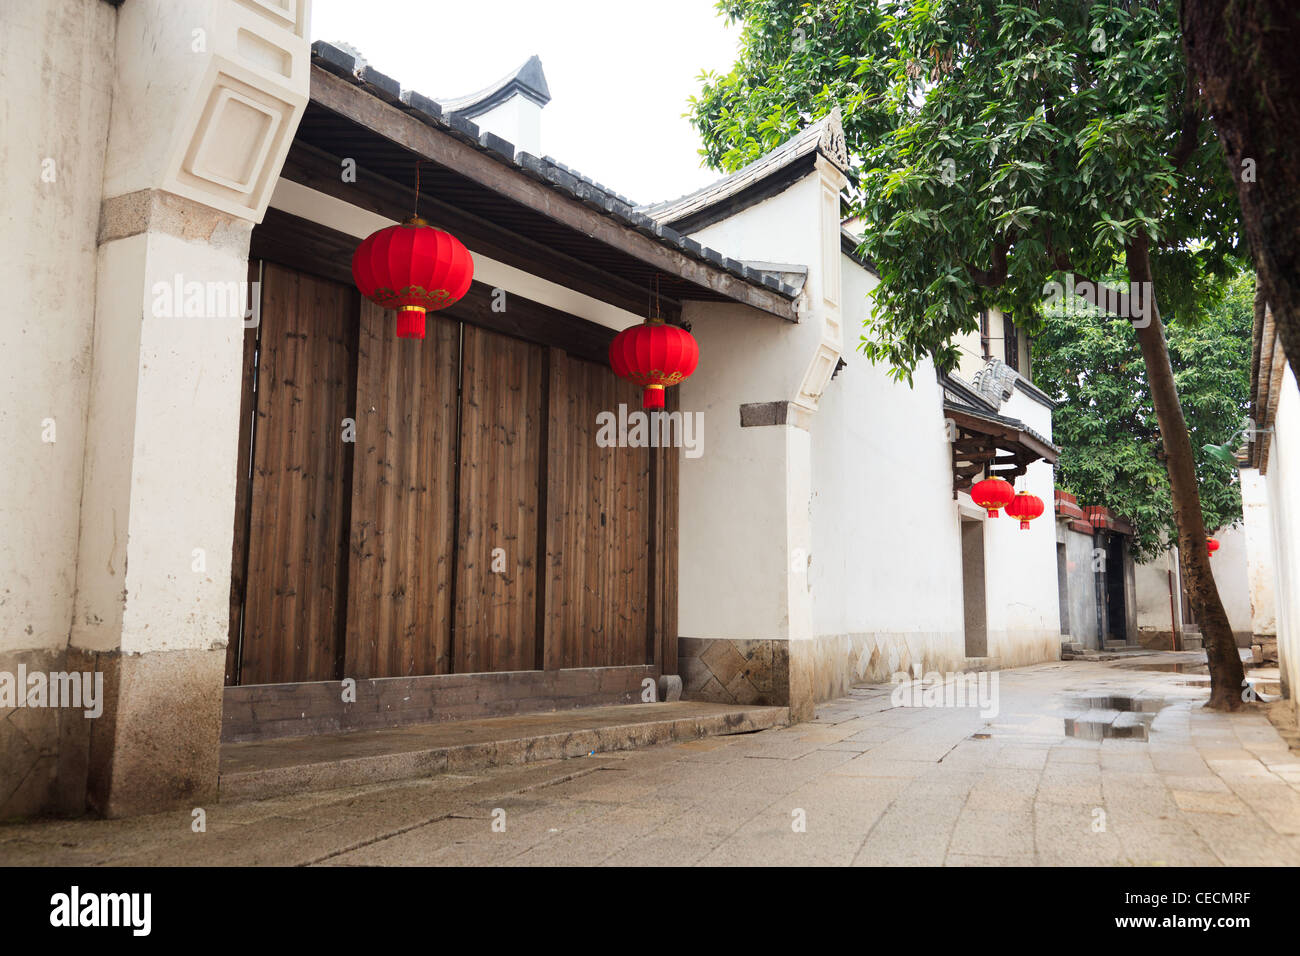 Tranquilo callejón chino tradicional. Foto de stock